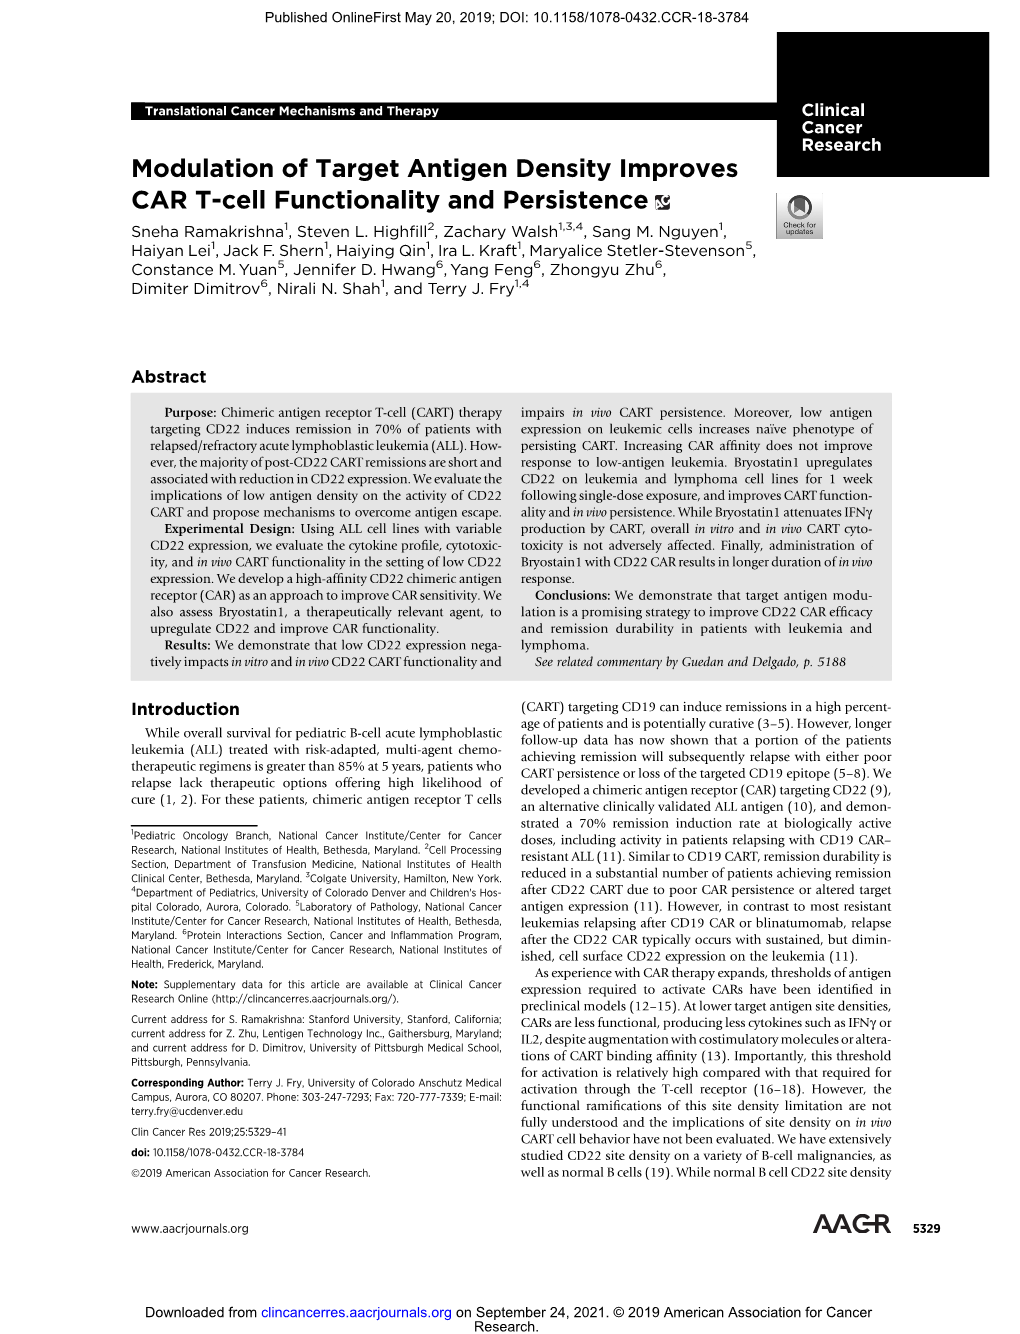 Modulation of Target Antigen Density Improves CAR T-Cell Functionality and Persistence Sneha Ramakrishna1, Steven L